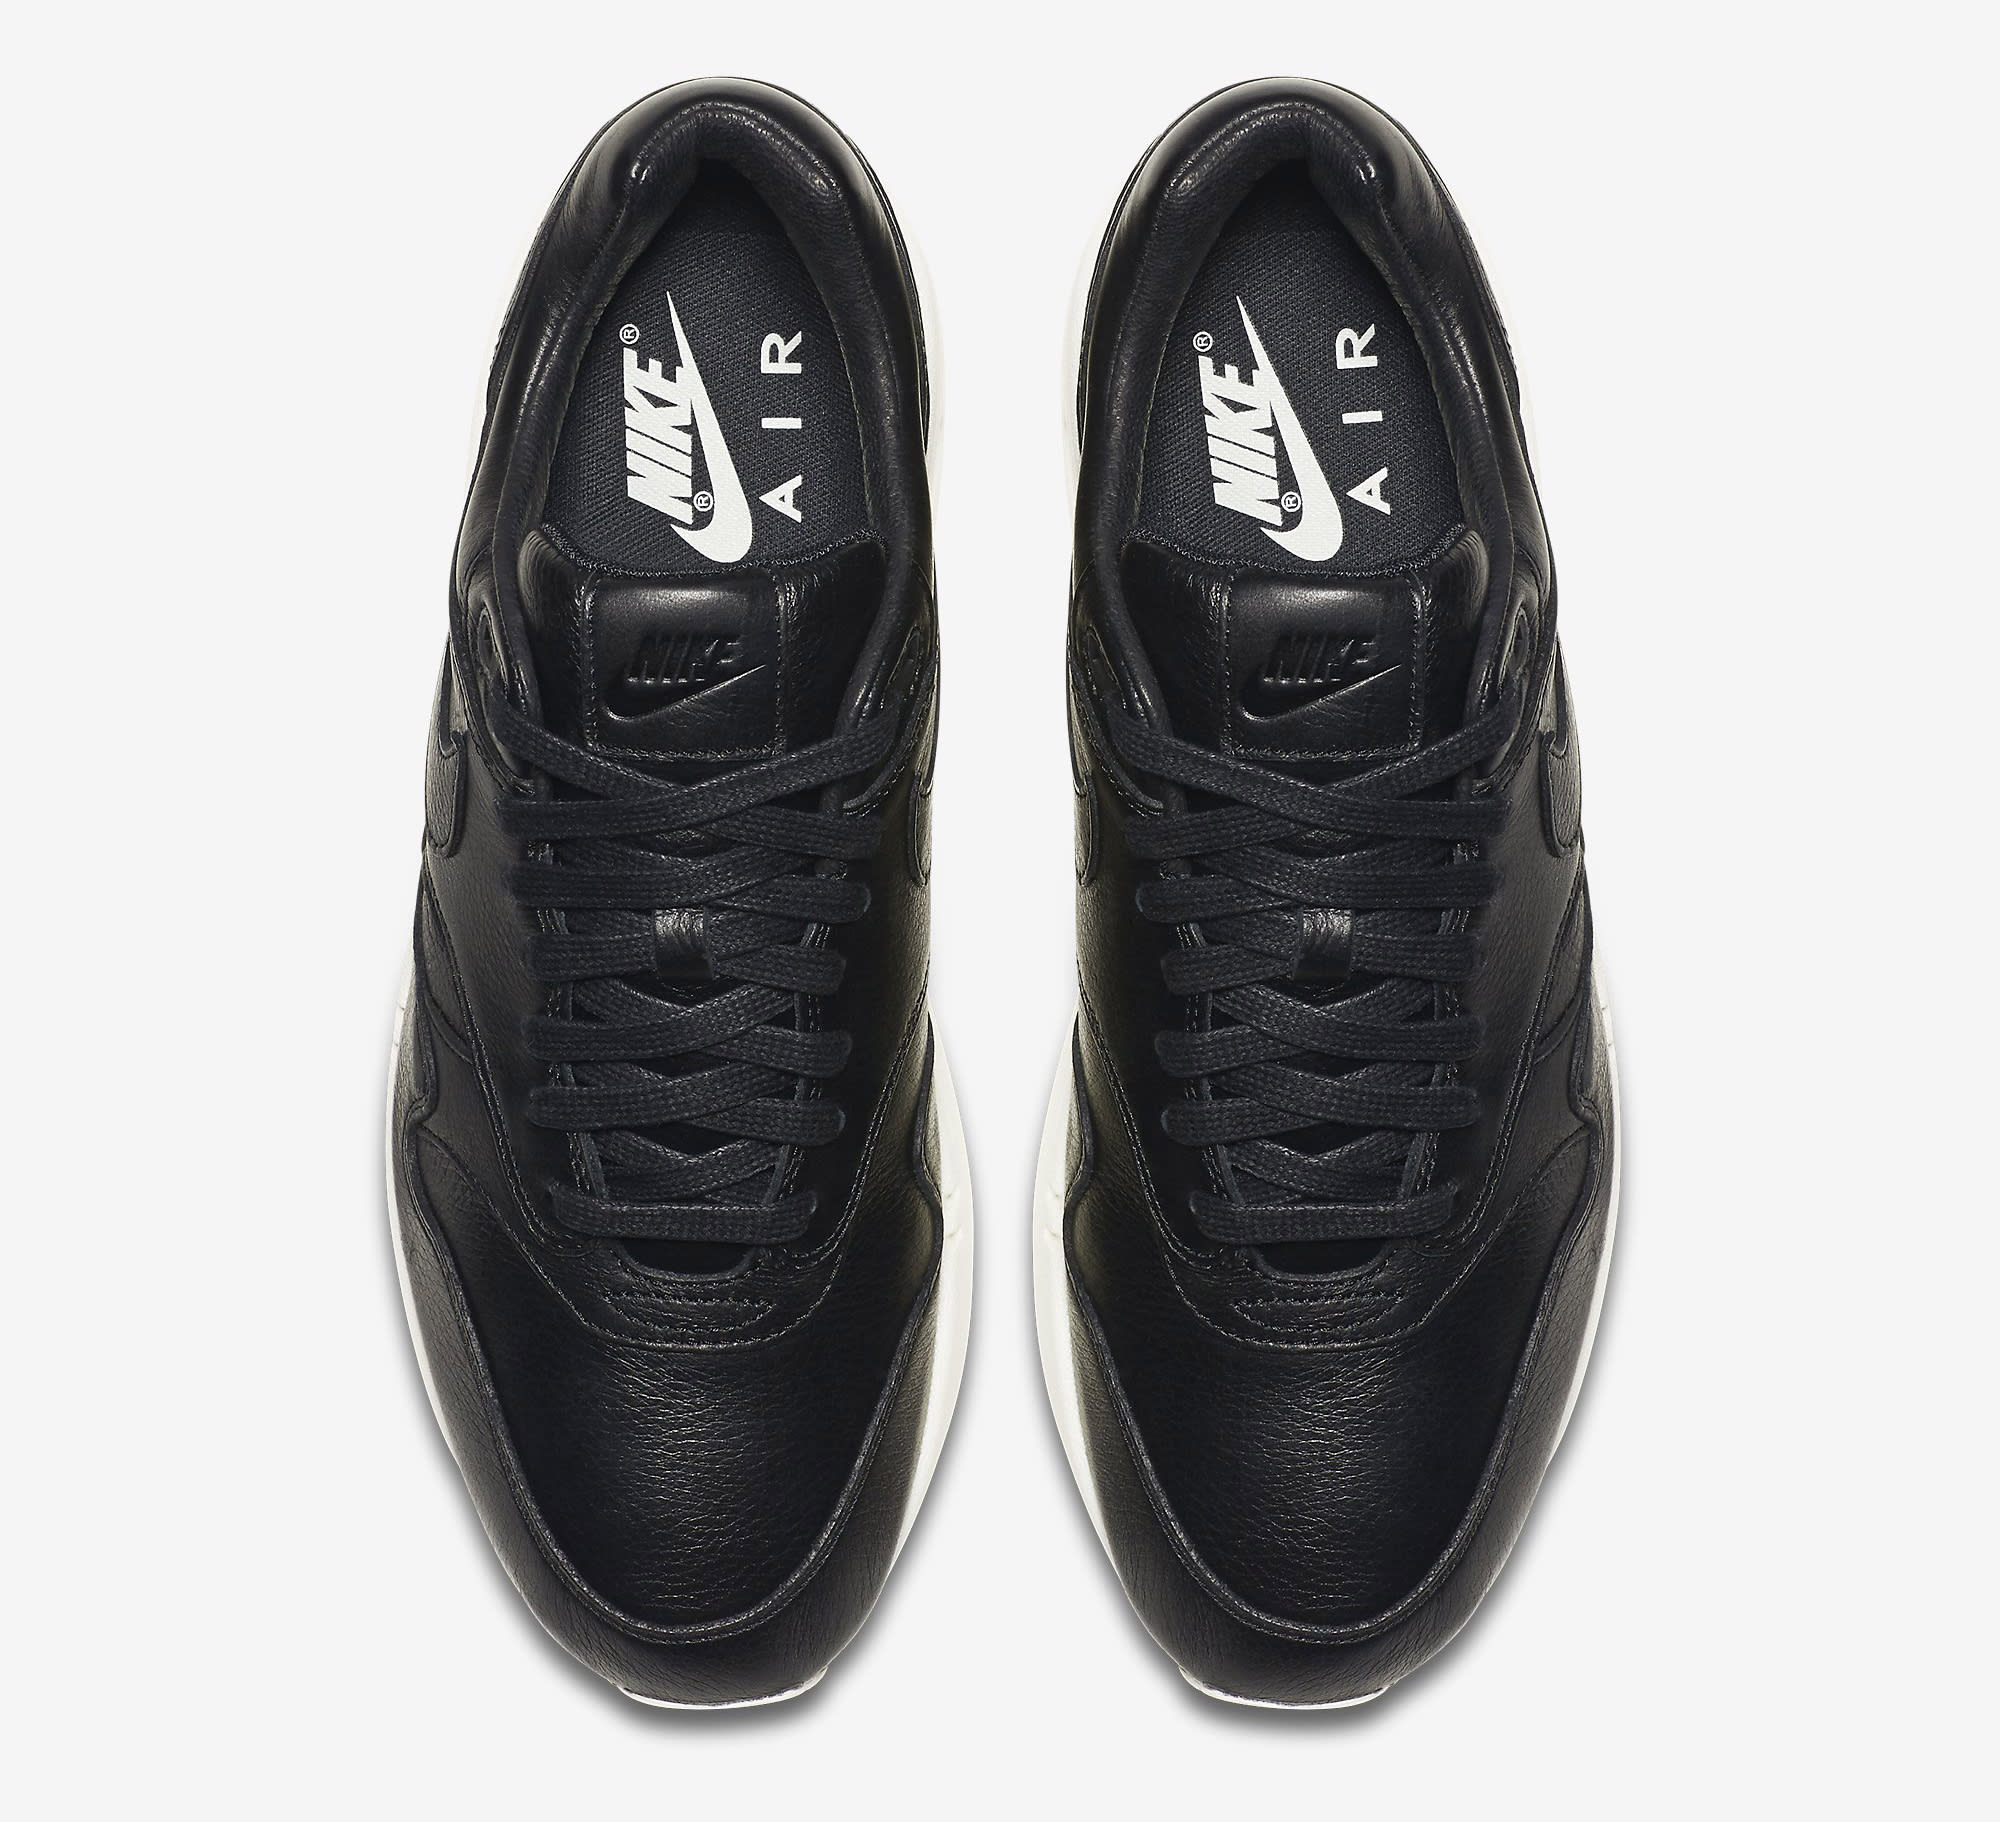 Nike Air Max 1 Pinnacle Leather Black 859554-003 Top